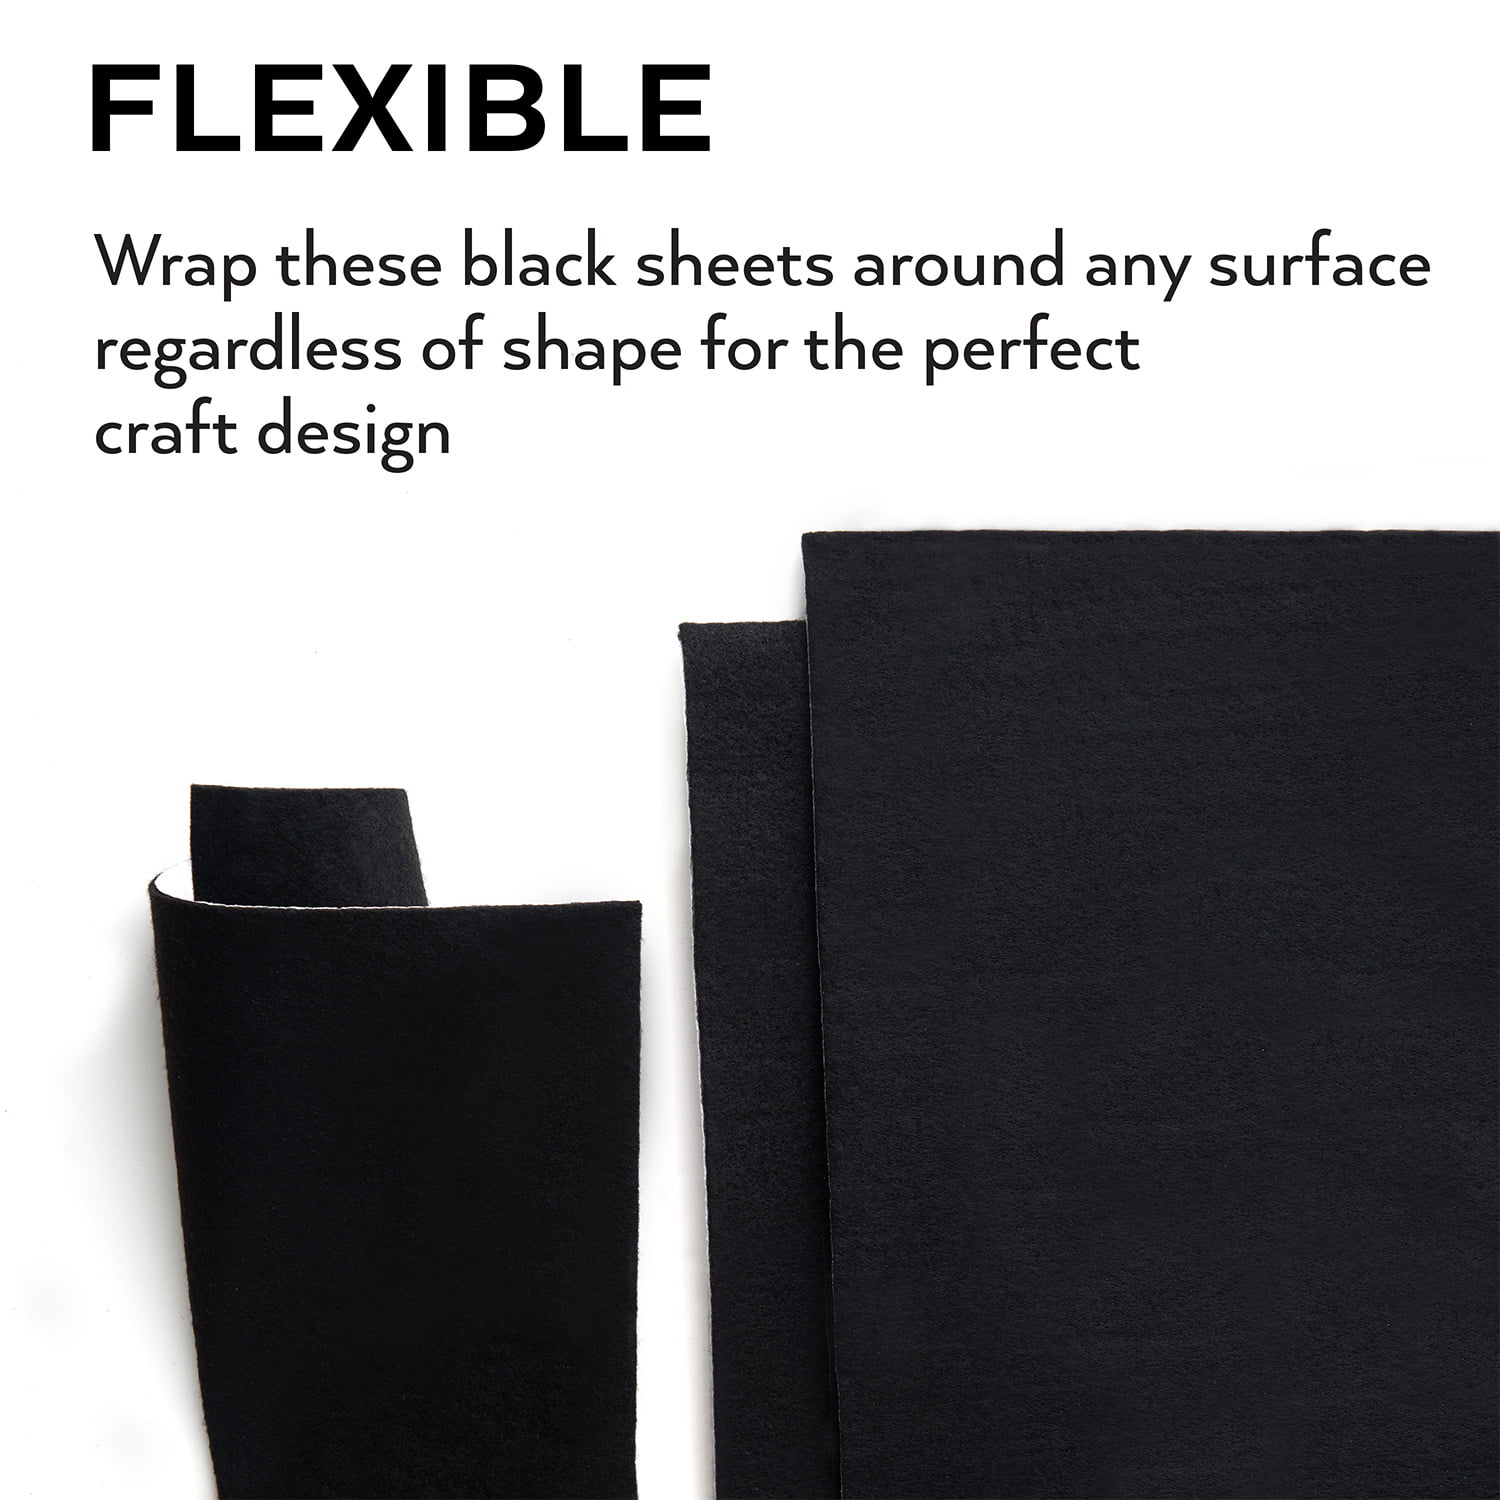 Arteza Adhesive Felt Fabric Sheets, Black, 8.3x11.8 - Set Of 20